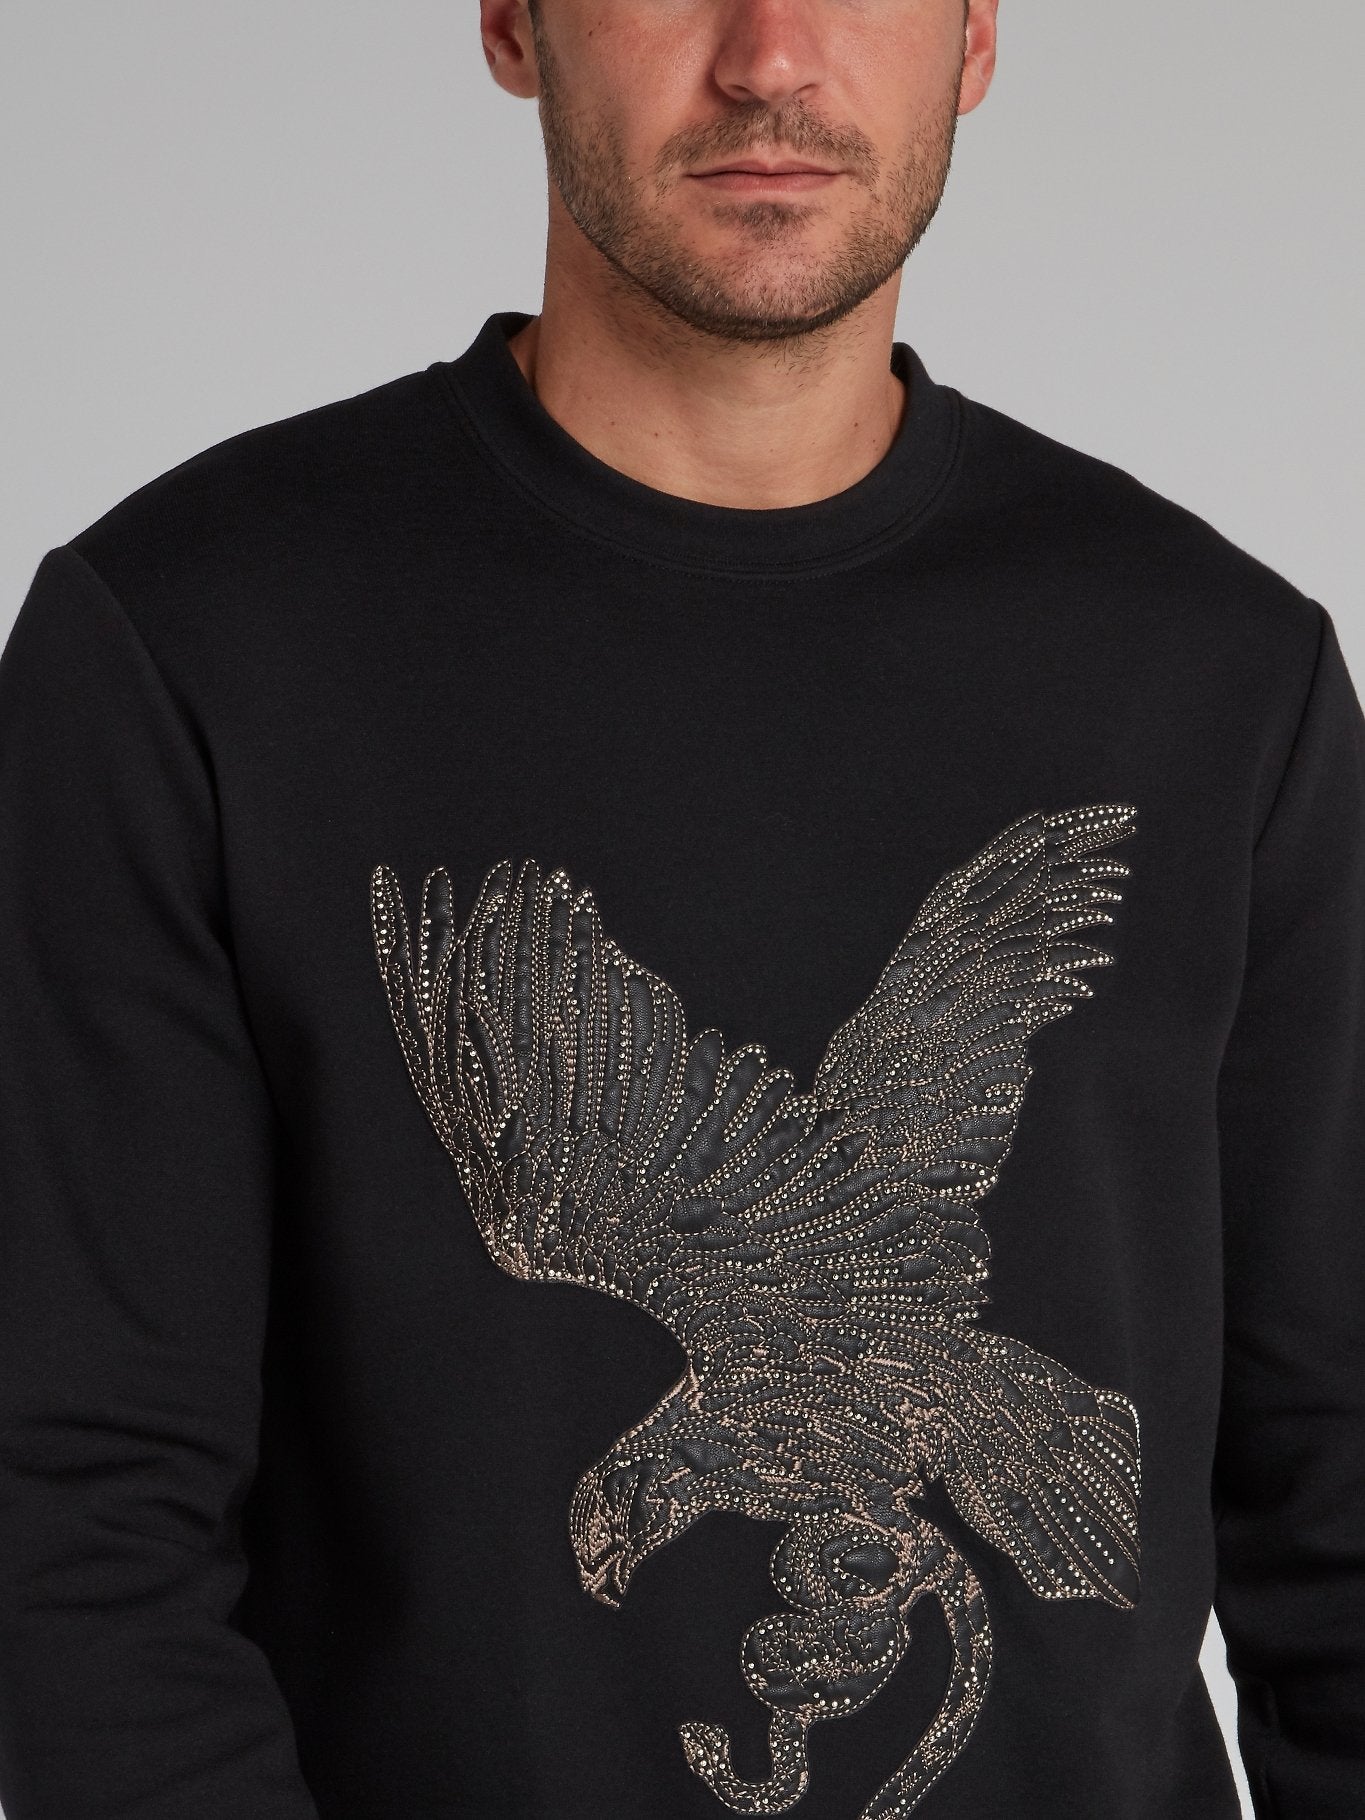 Black Eagle Patch Sweatshirt